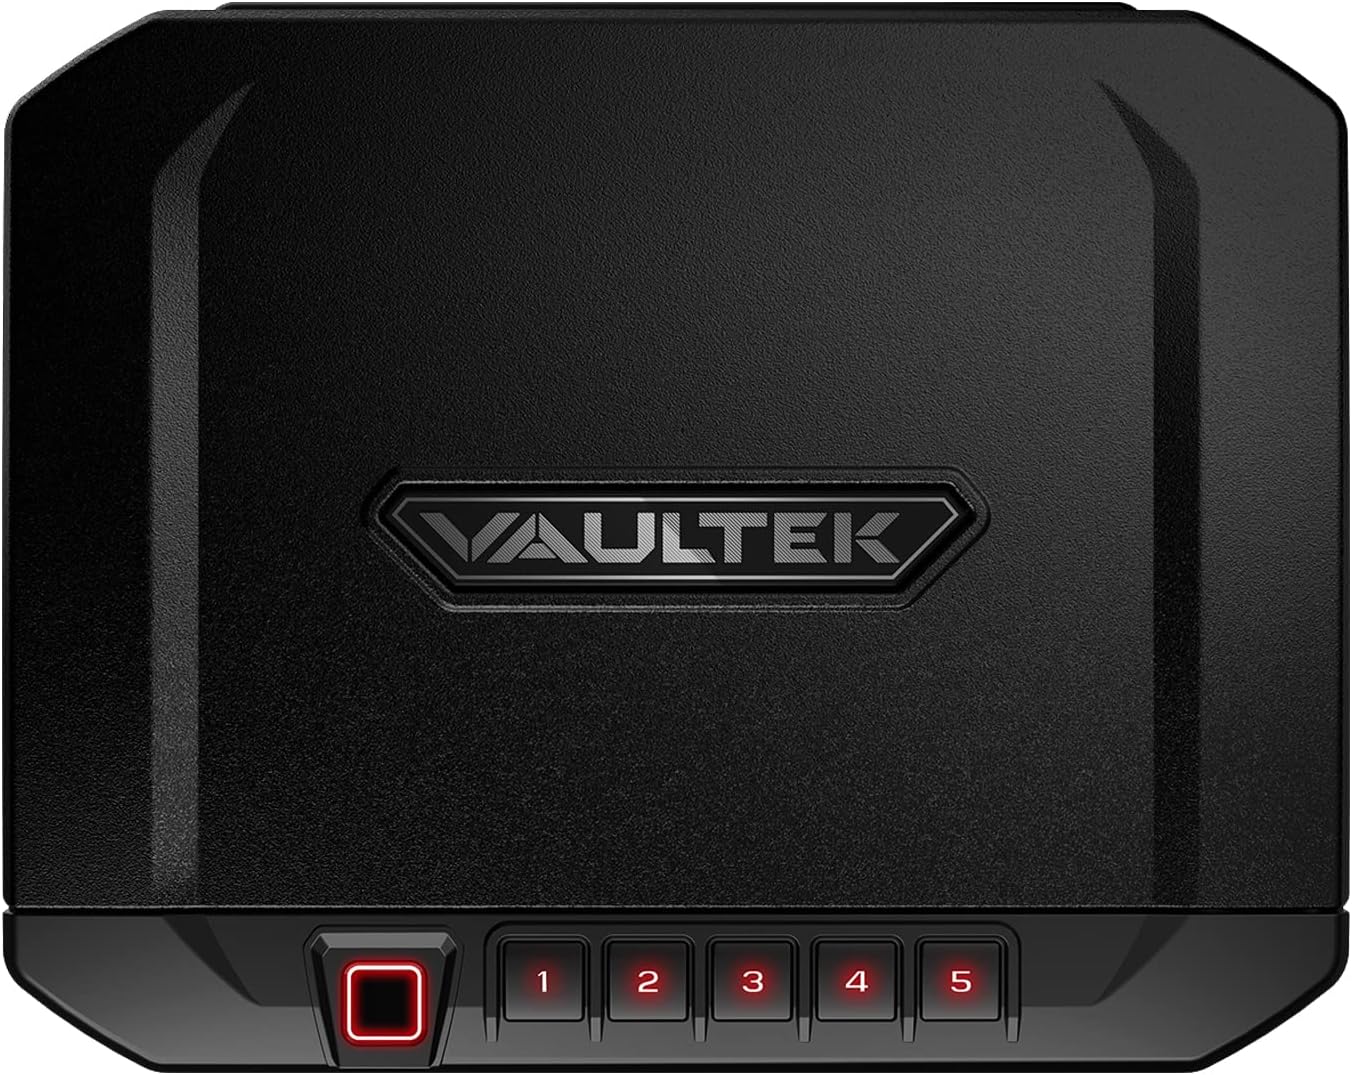 VAULTEK VS10i Biometric Handgun